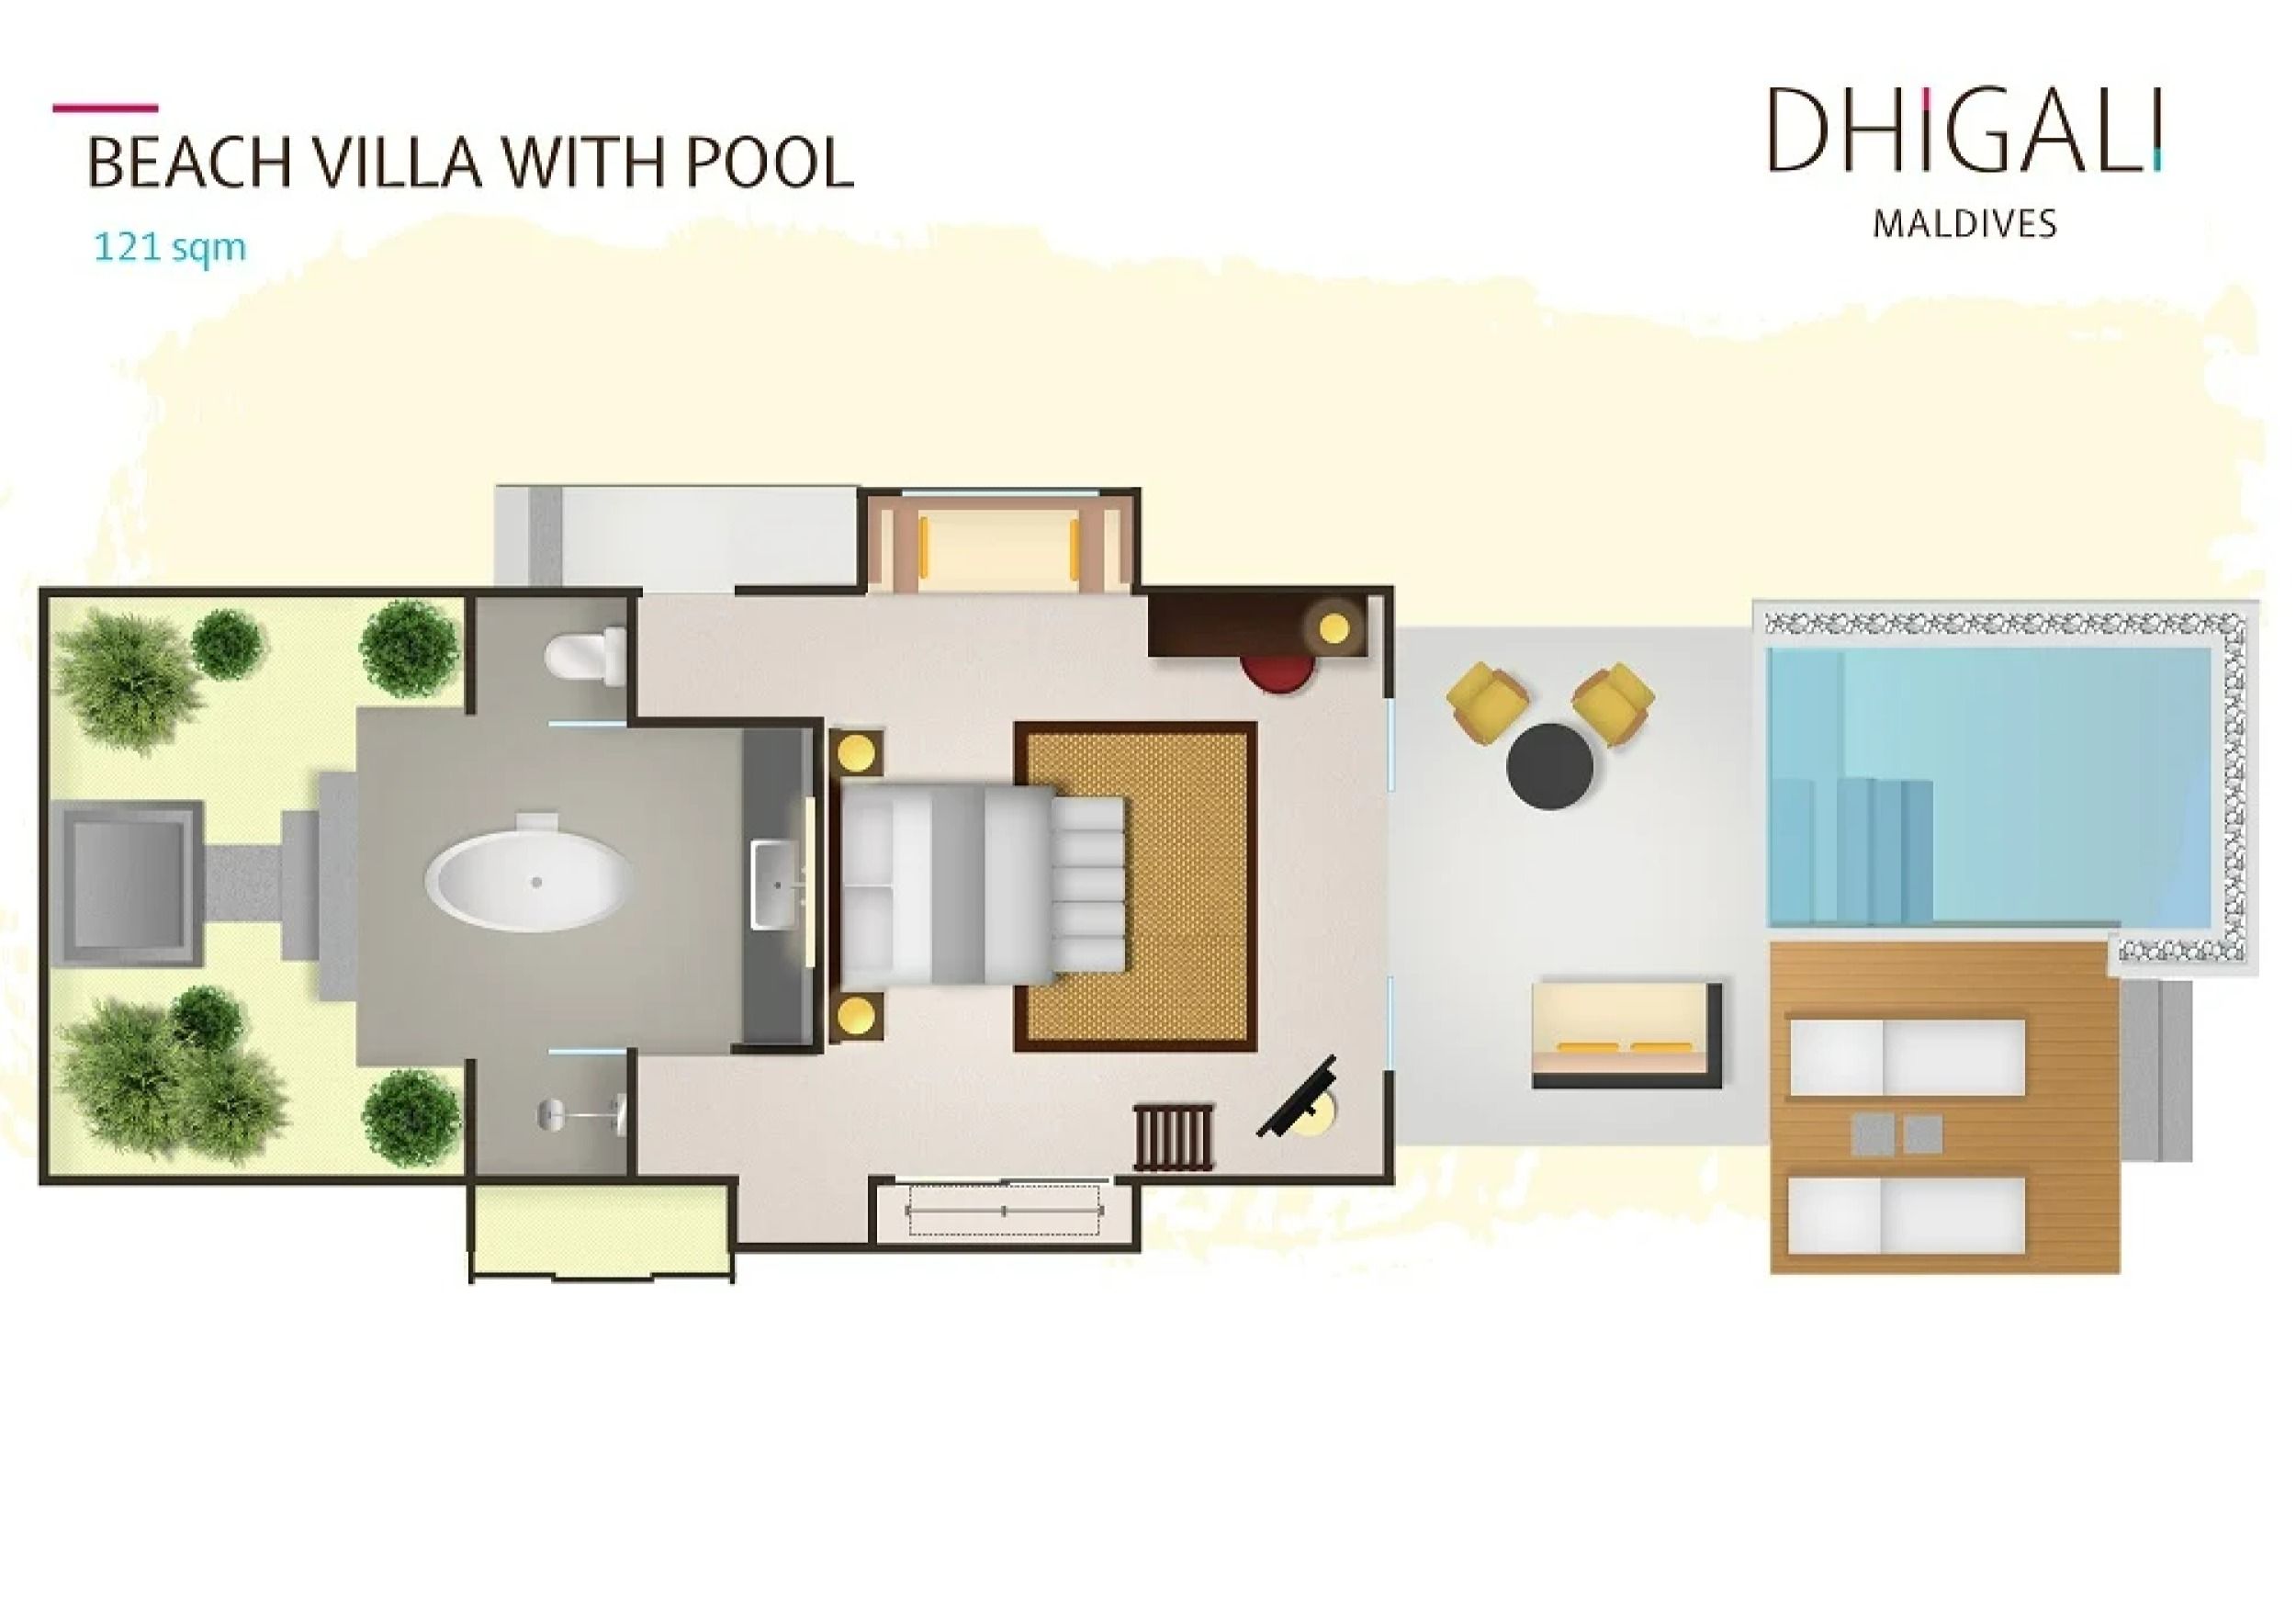 Beach Villa with Pool - Floor Plan - Dhigali Maldives